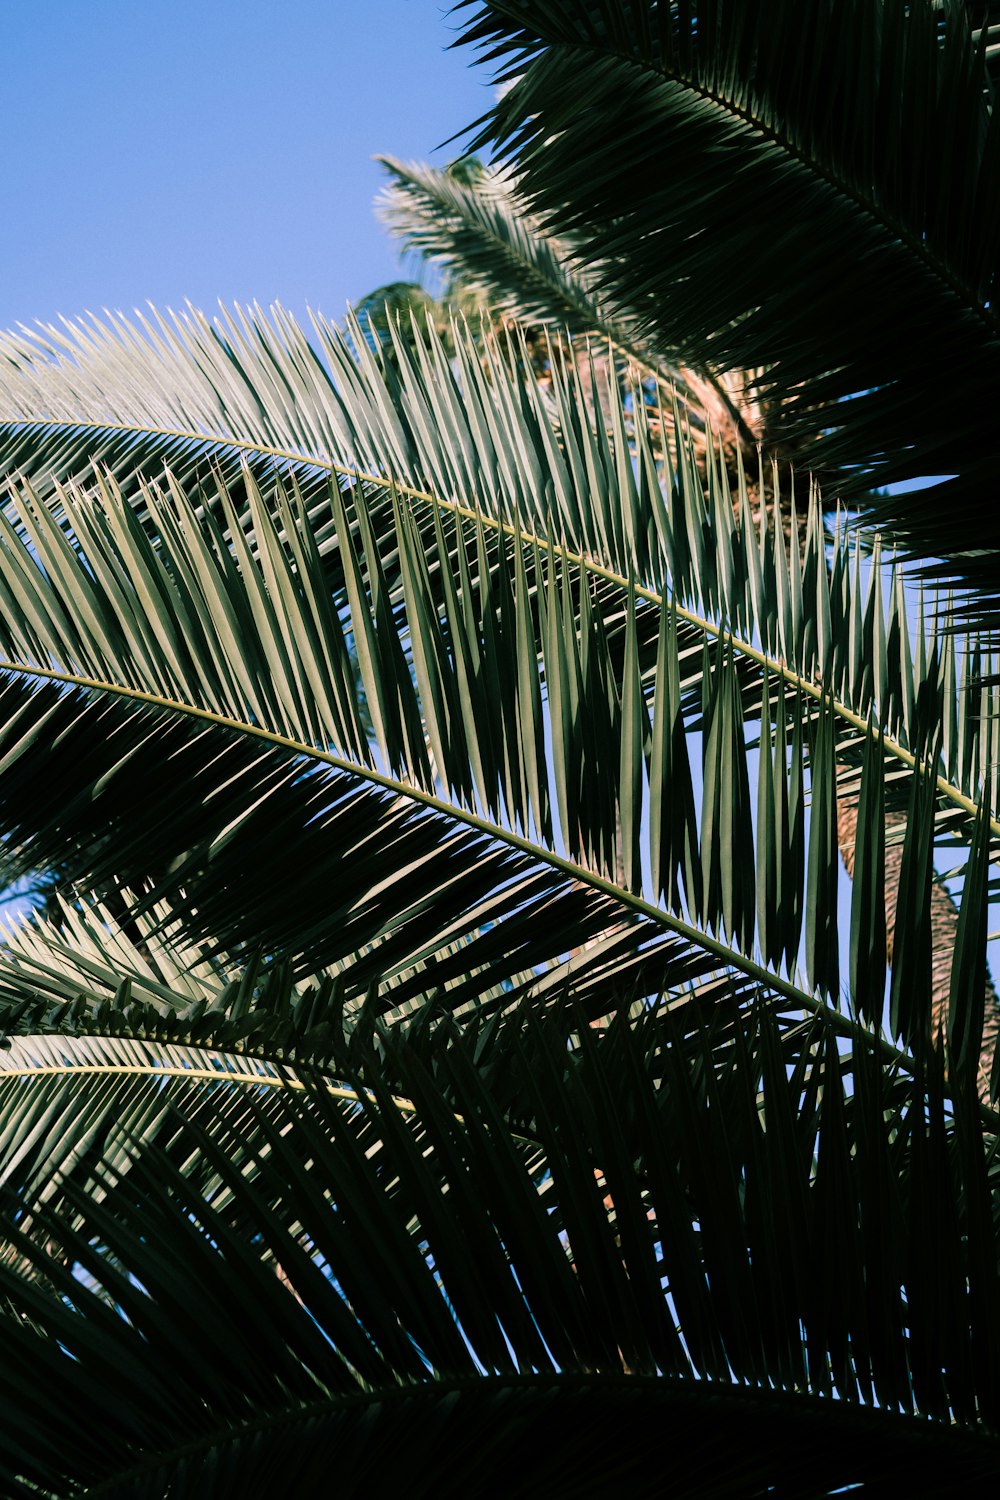 iphone 5 wallpaper palm tree